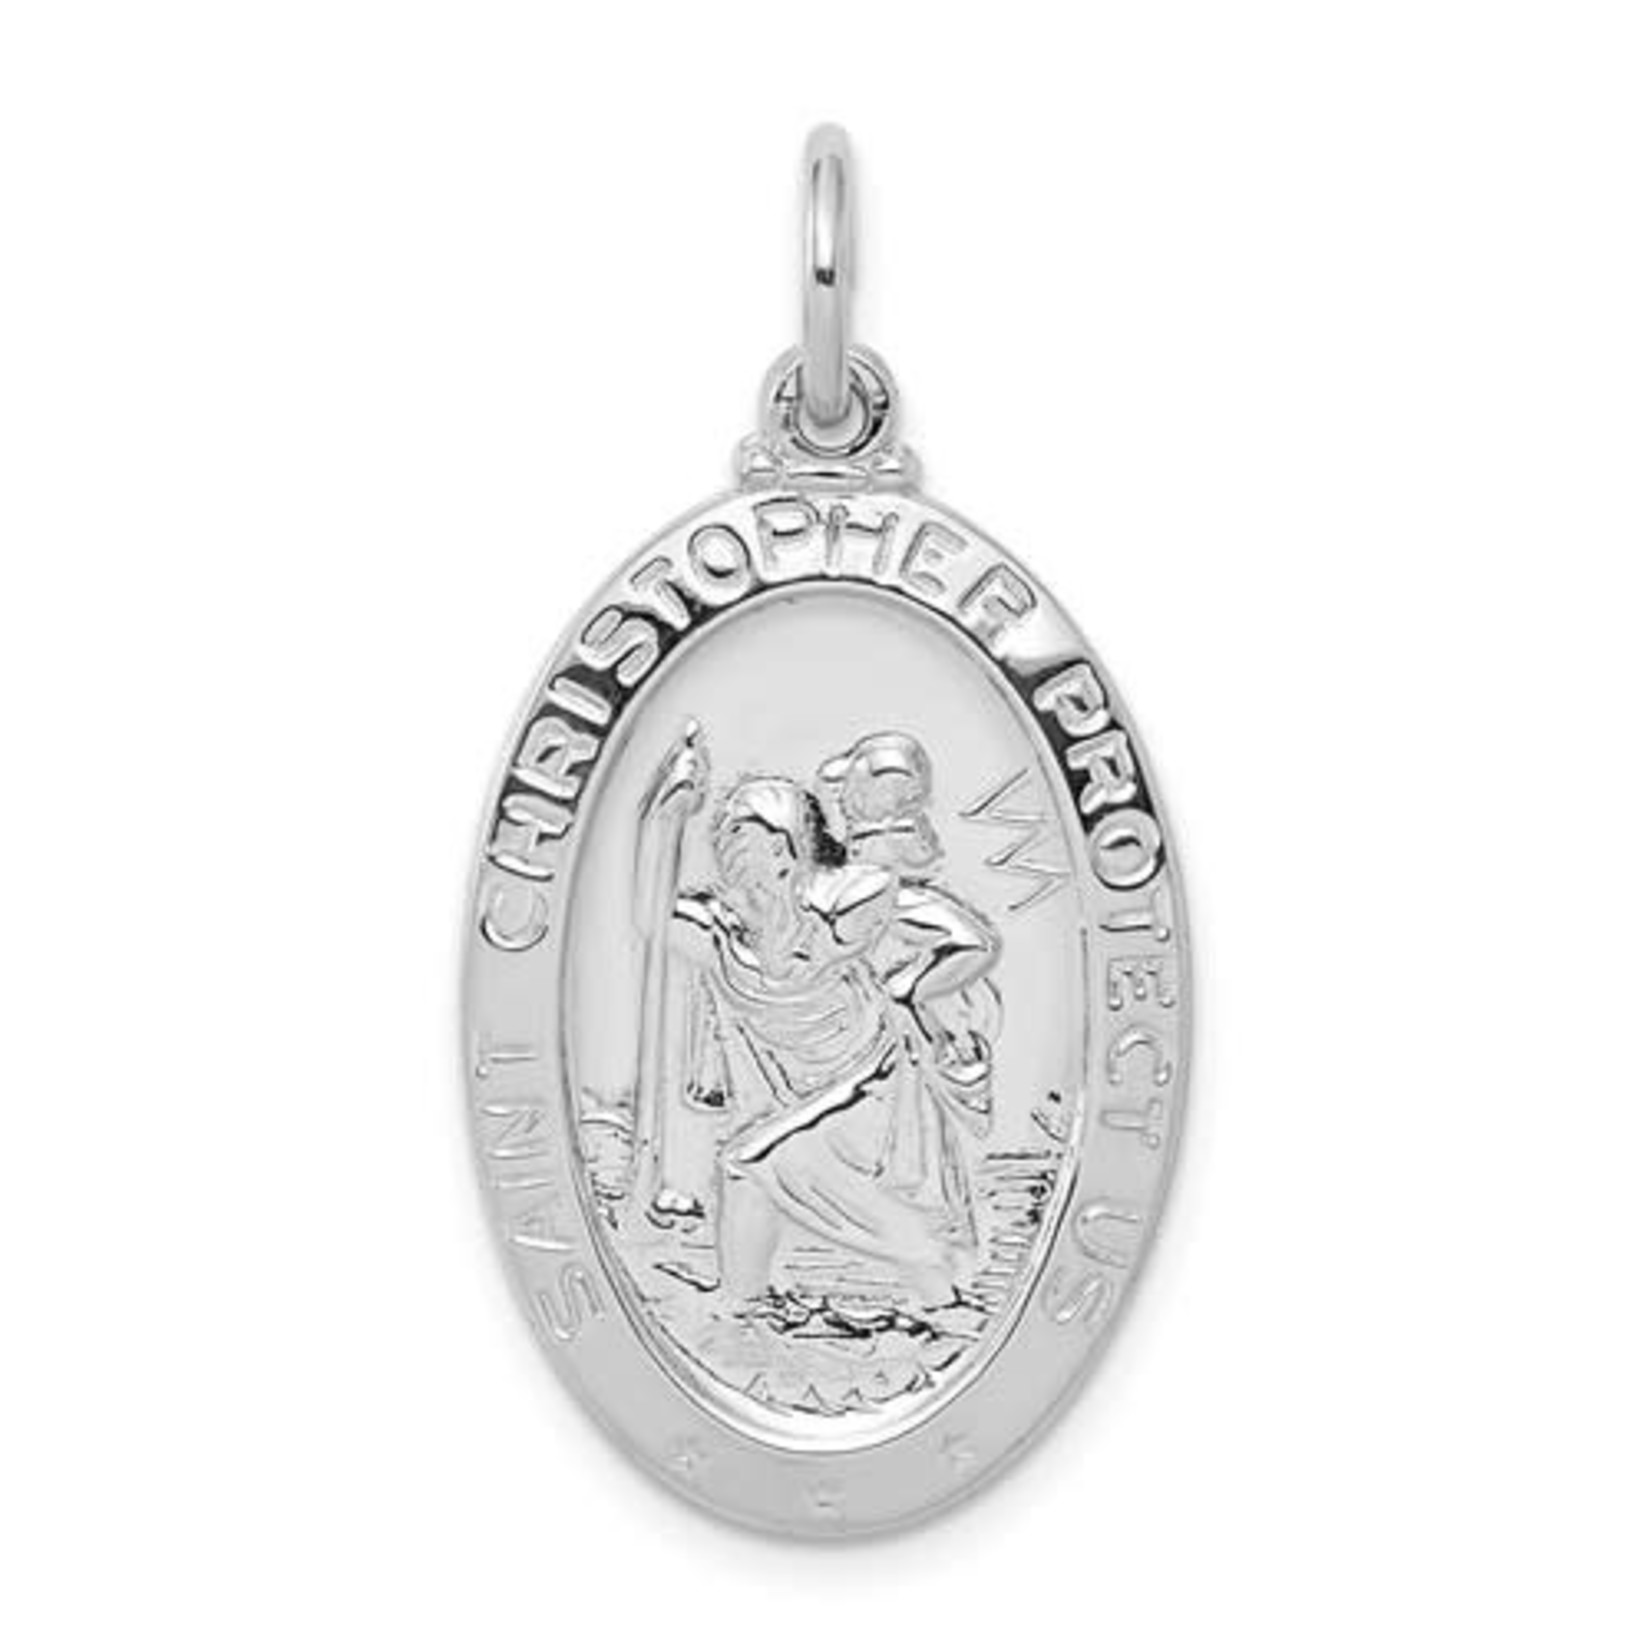 QUALITY GOLD OF CINCINNATI INC Sterling Silver Oval Saint Christopher Medal